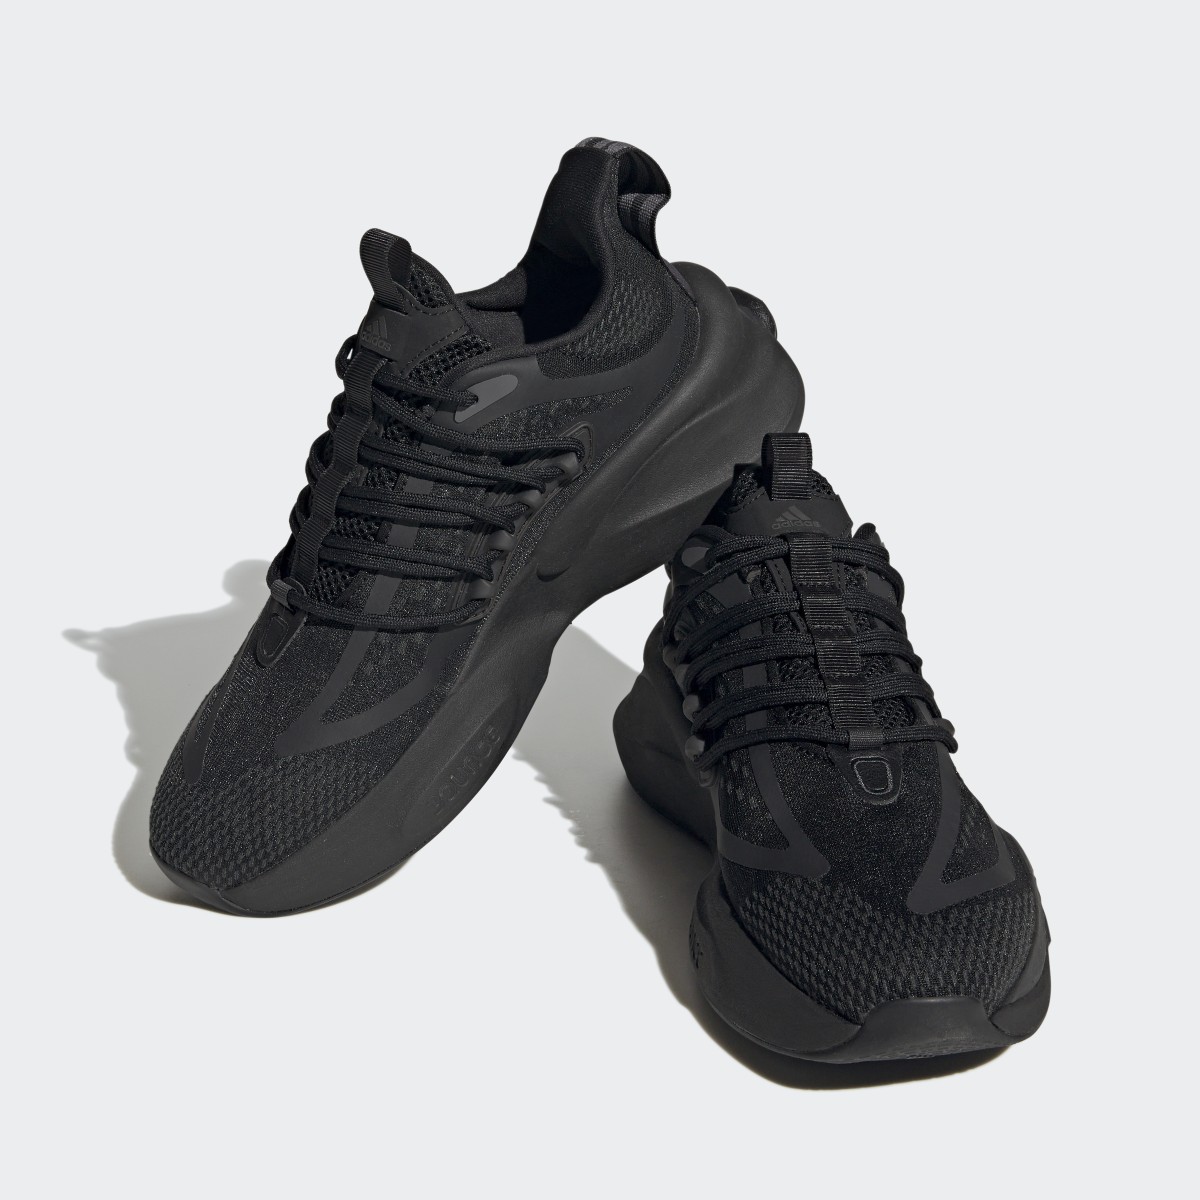 Adidas Alphaboost V1 Shoes. 5